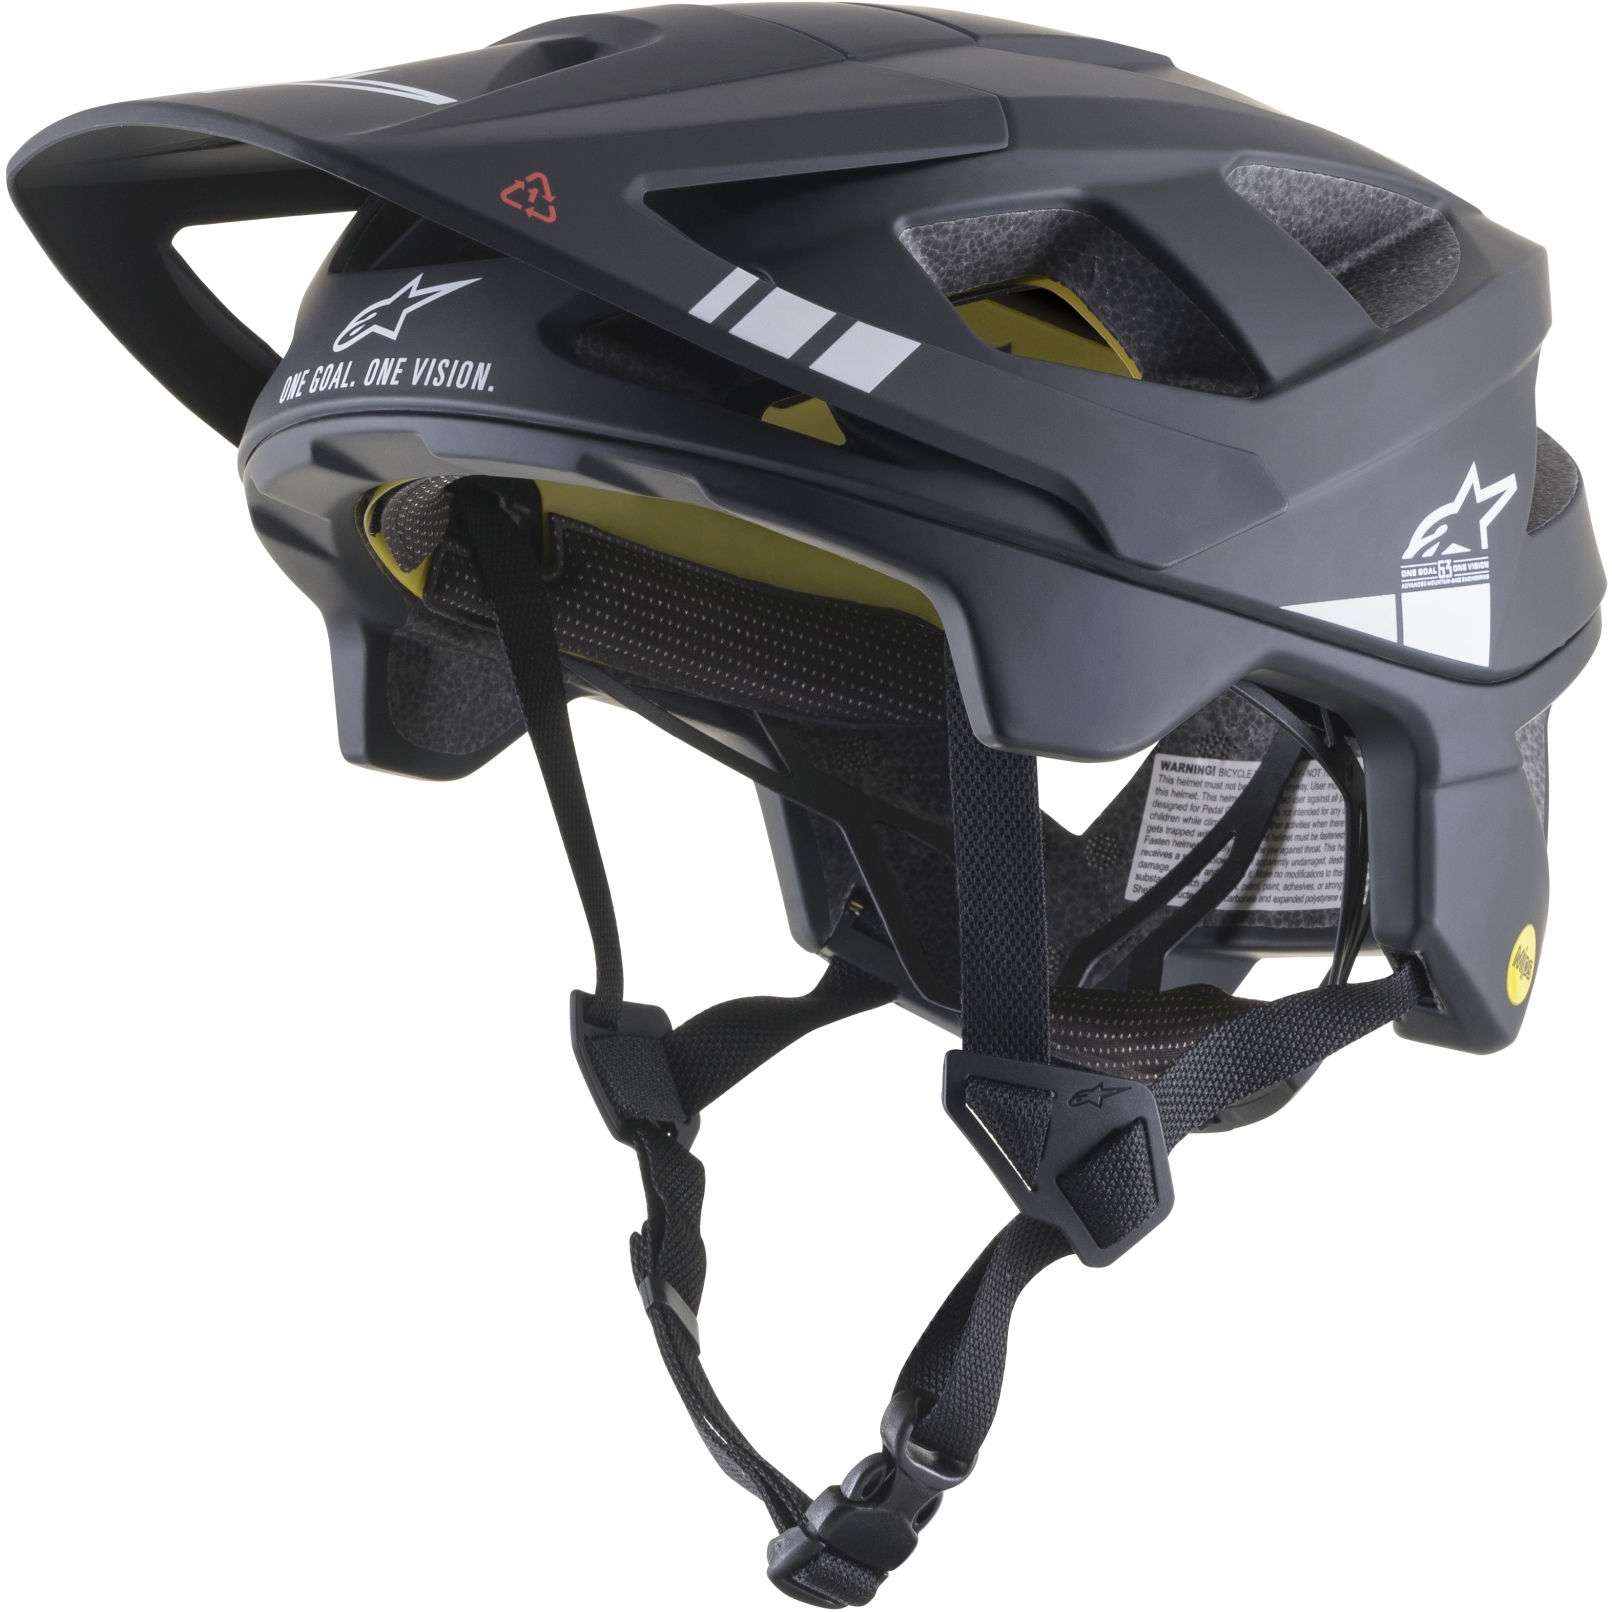 Productfoto van Alpinestars Vector Tech Helm - A1 - black/light gray matt